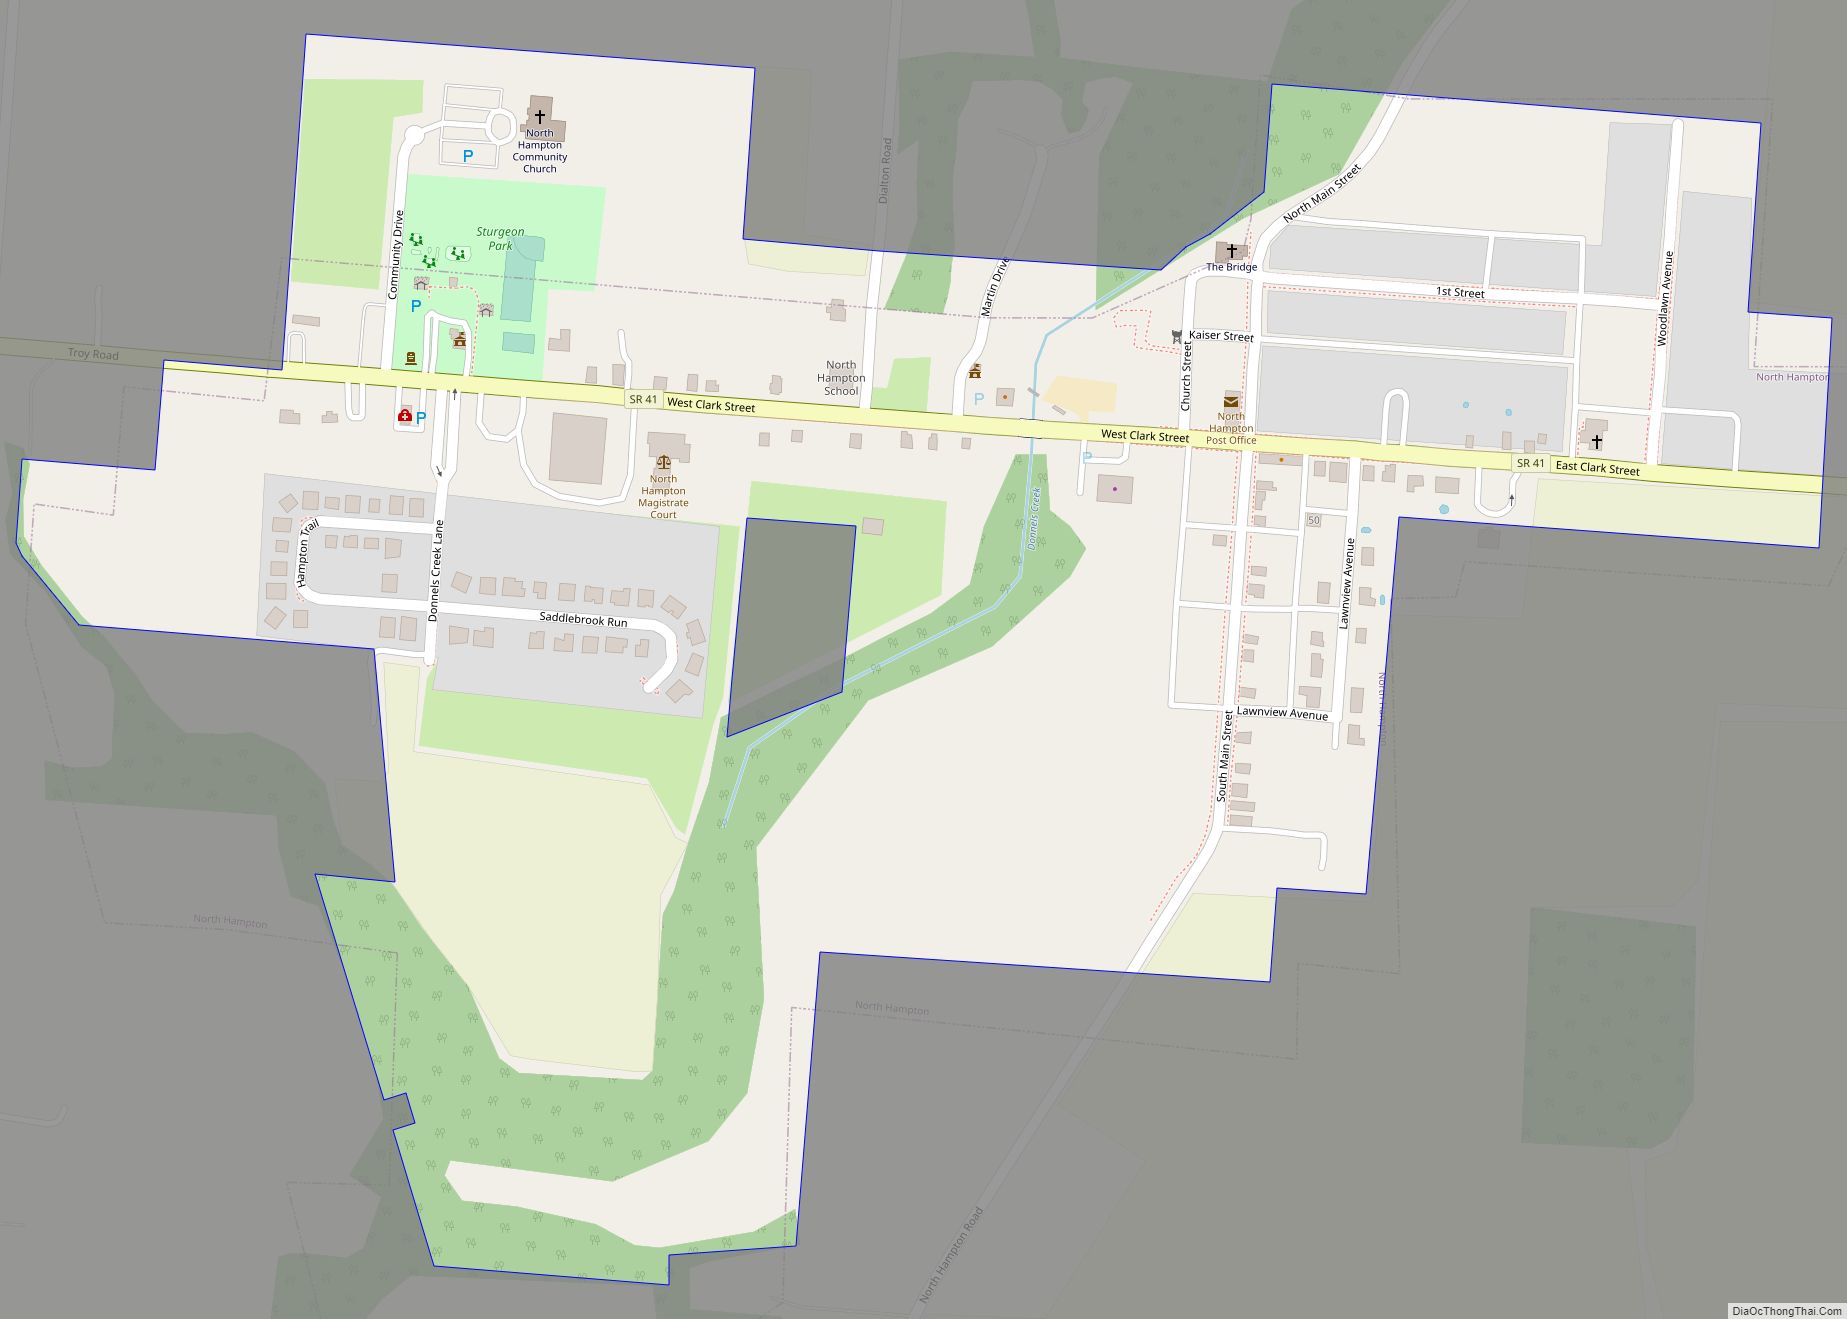 Map of North Hampton village